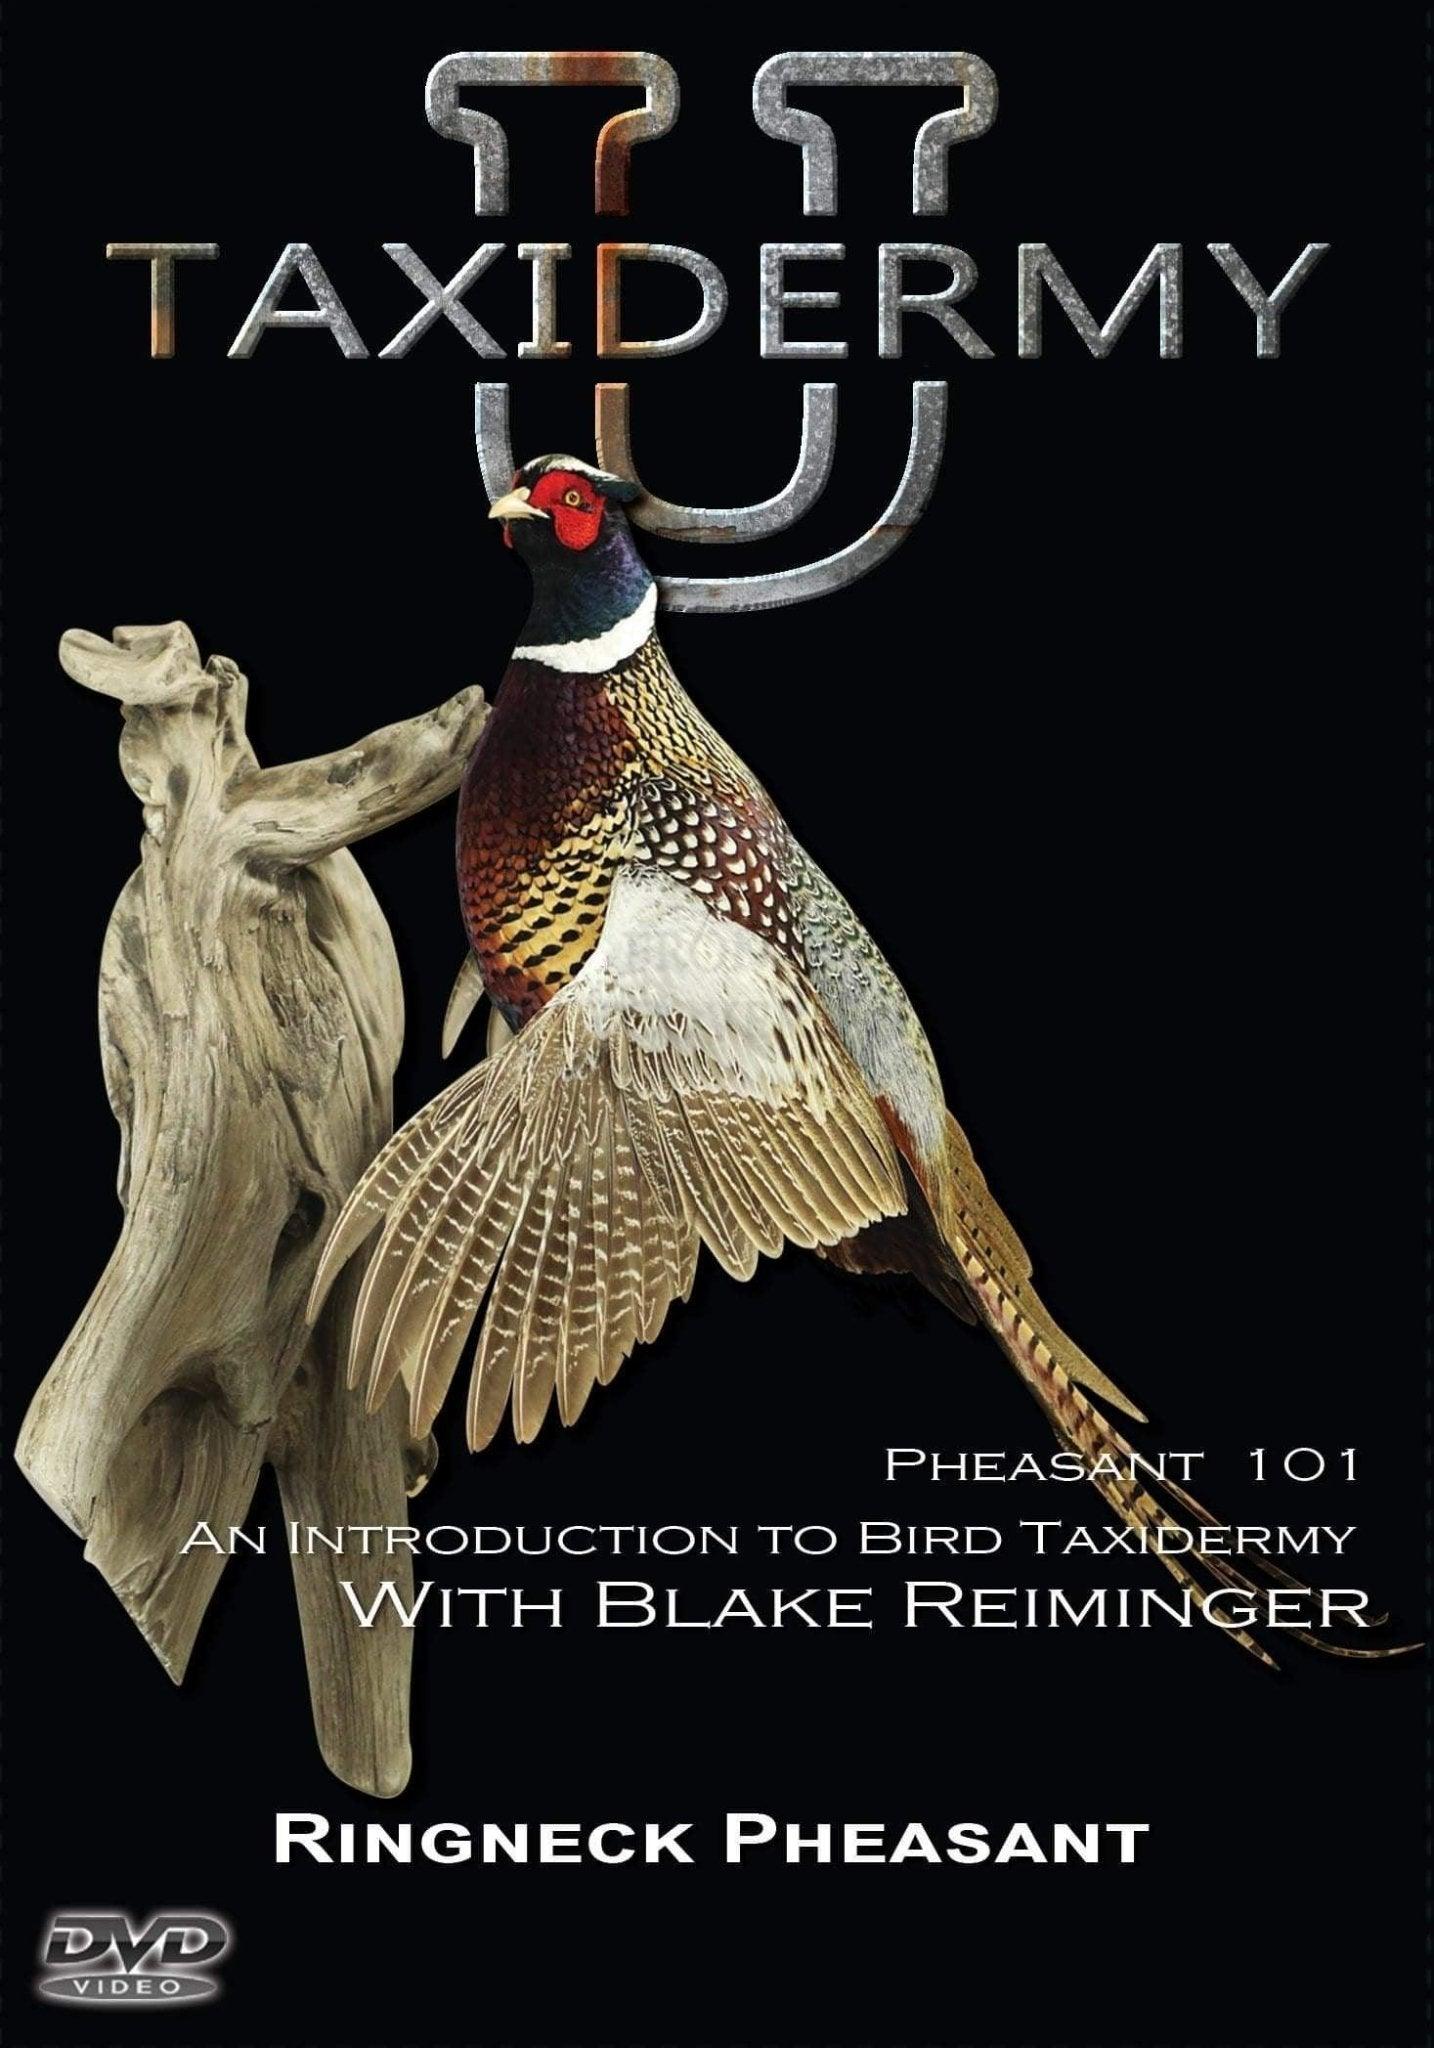 Mounting a Pheasant 101 w/ Blake Reiminger DVD by Taxidermy University - Matuska Taxidermy Supply Company